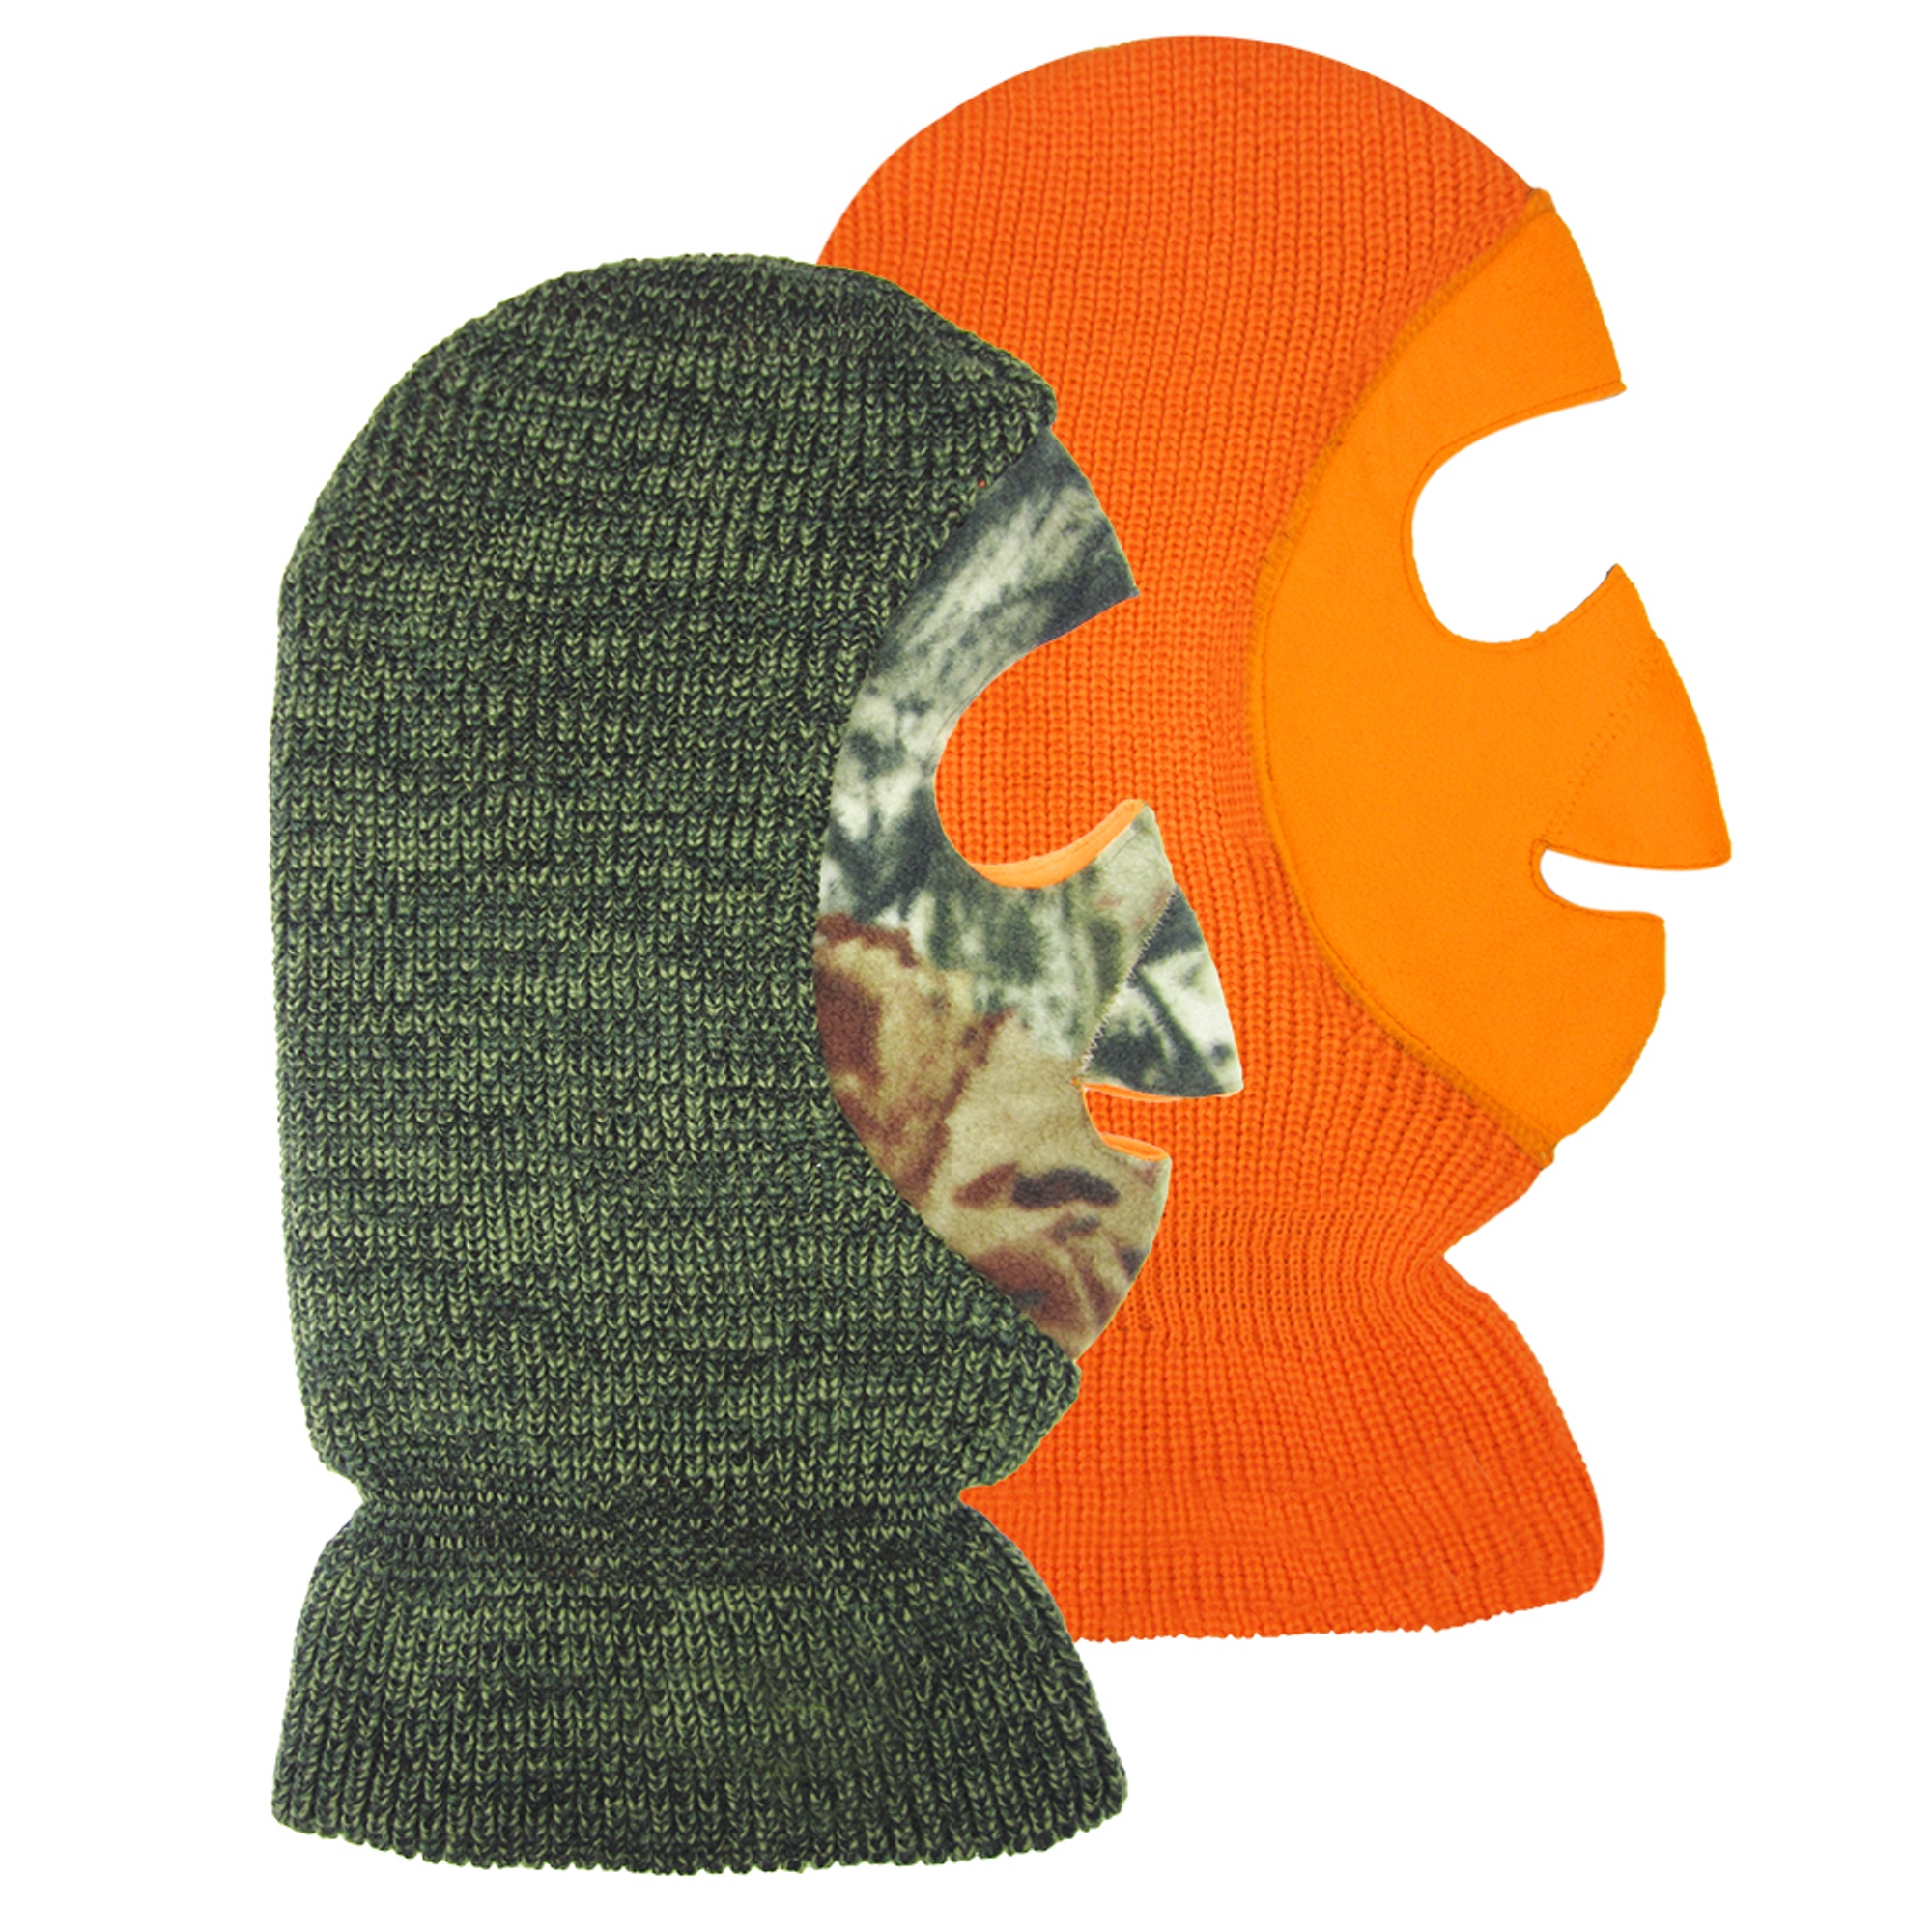 Acrylic Knit Mask w/Fleece Face Panel - Reverses from Real Tree to Blaze Orange